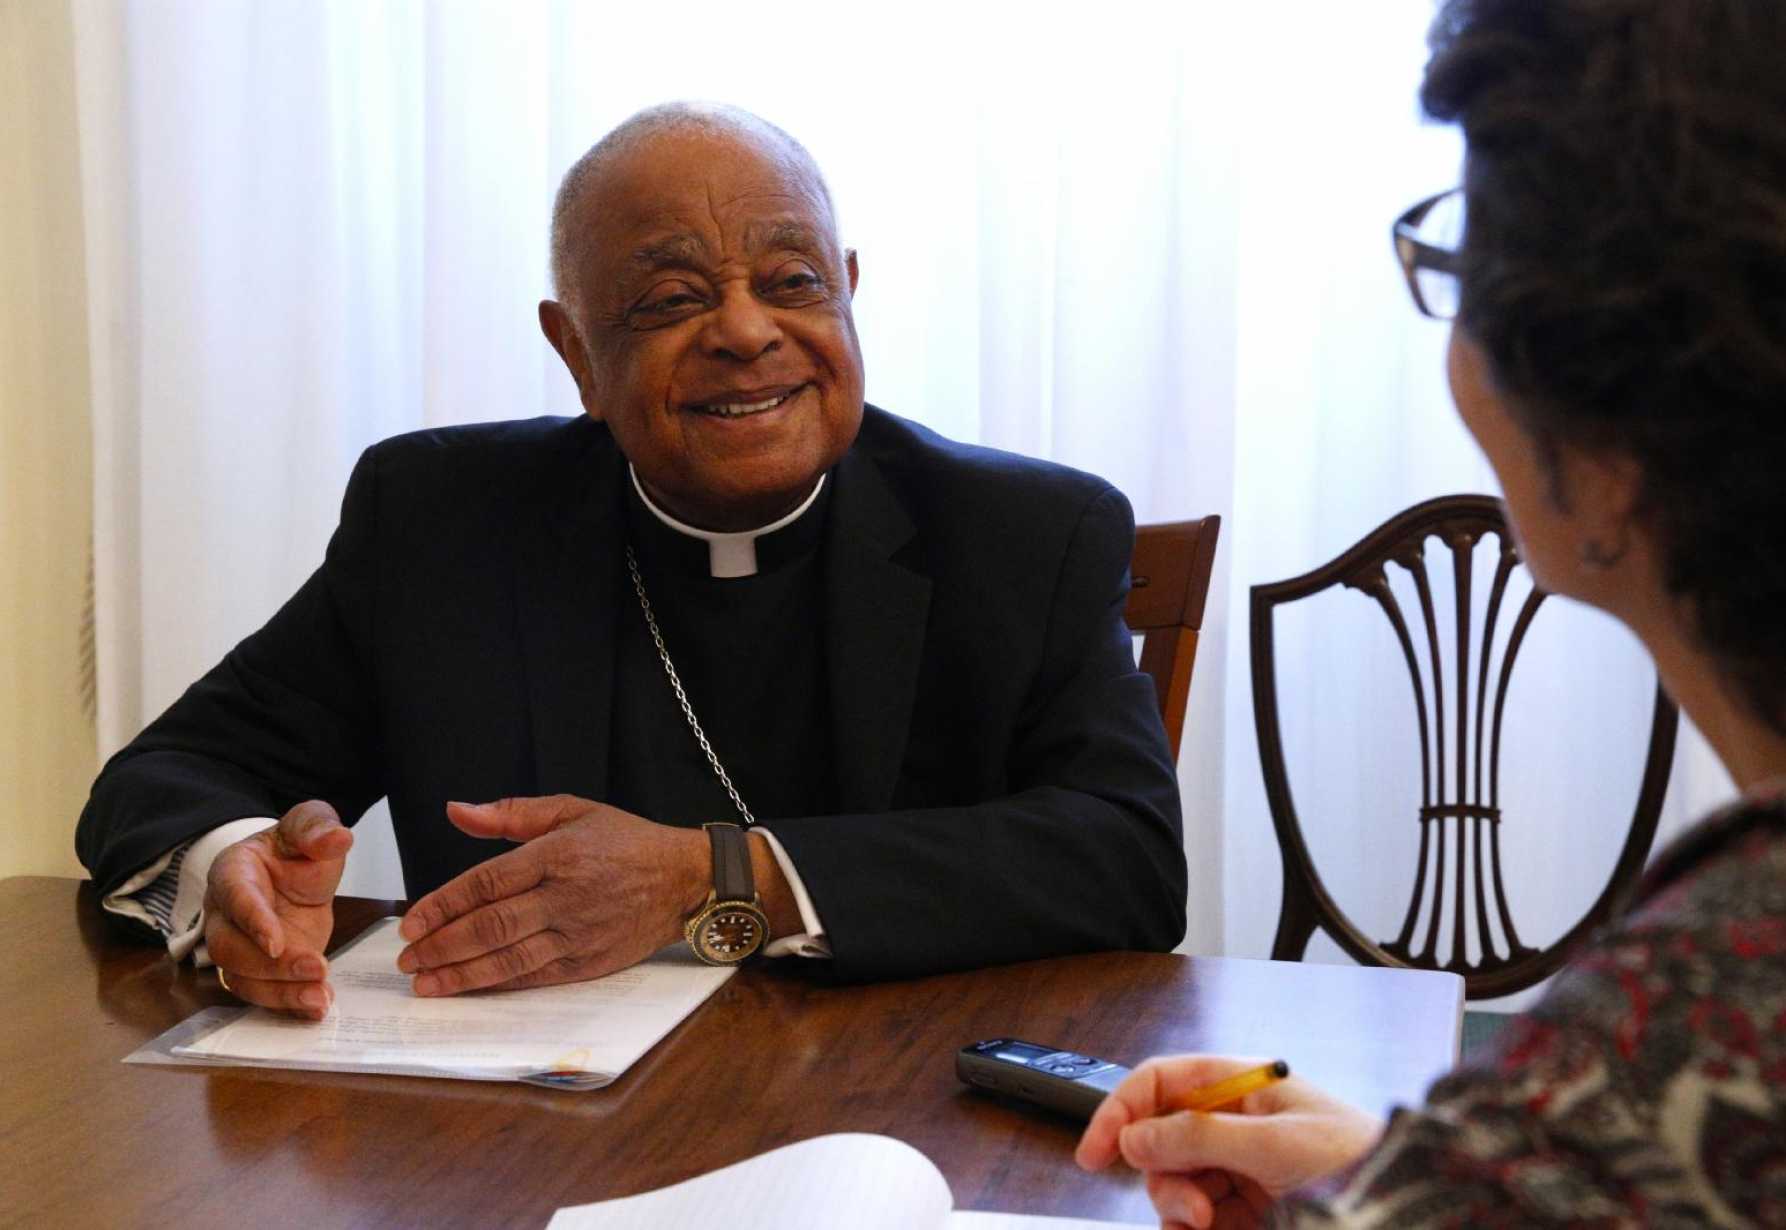 Parish priests are lifeline to church's mission, cardinal says